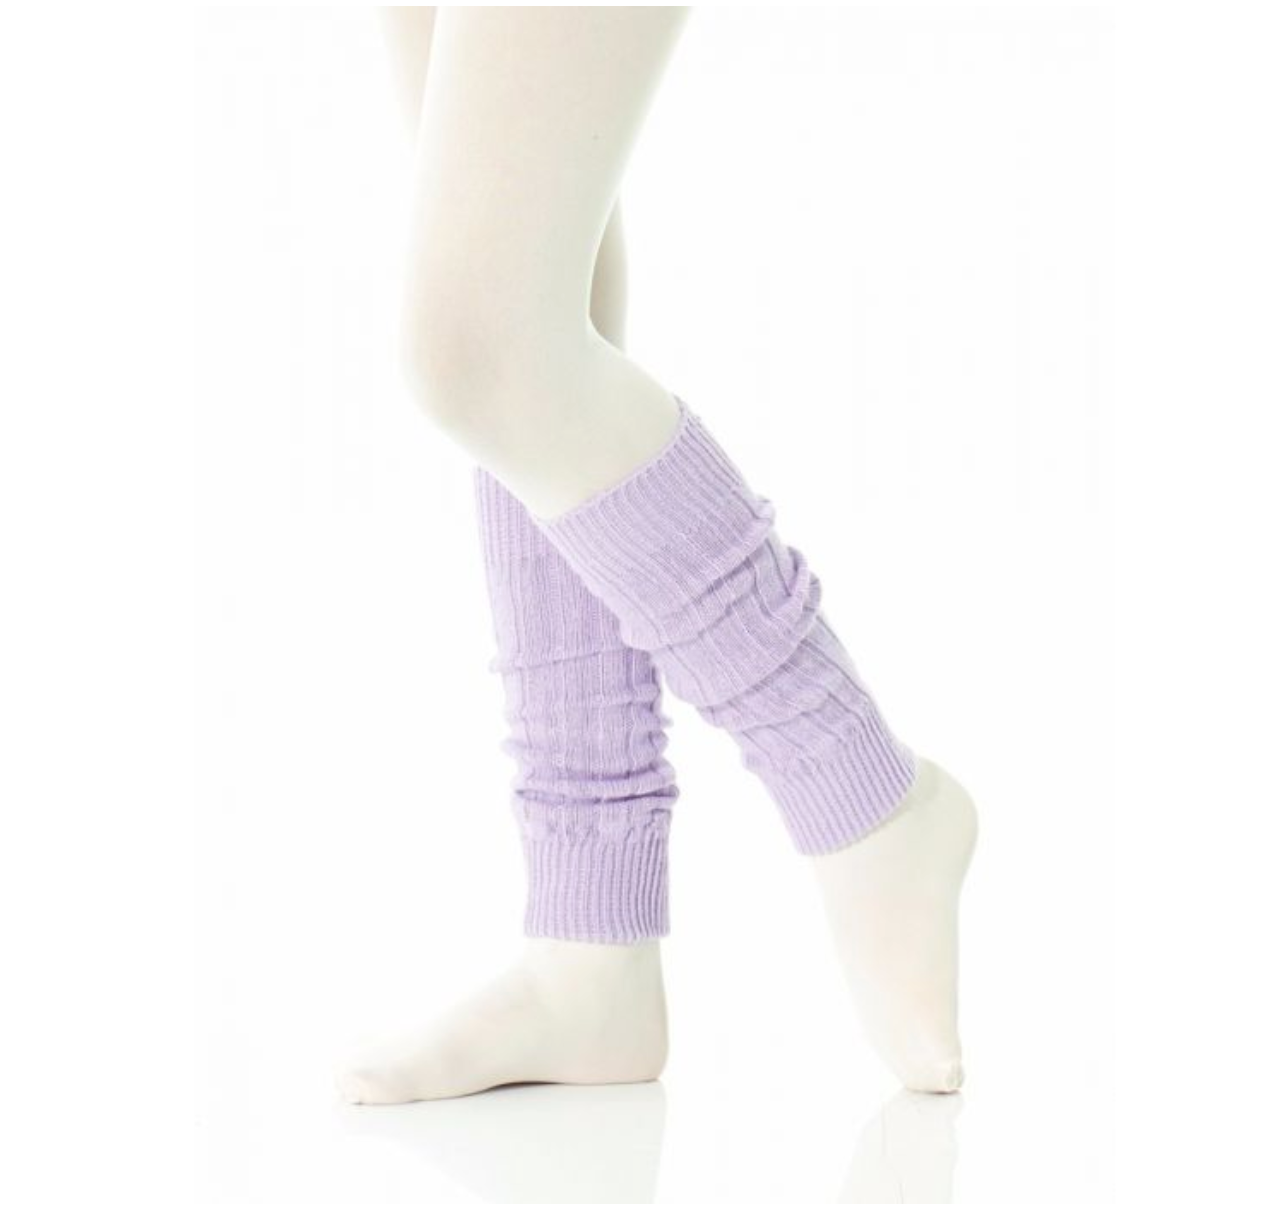 Mondor 251 leg warmers (junior size) in lilac